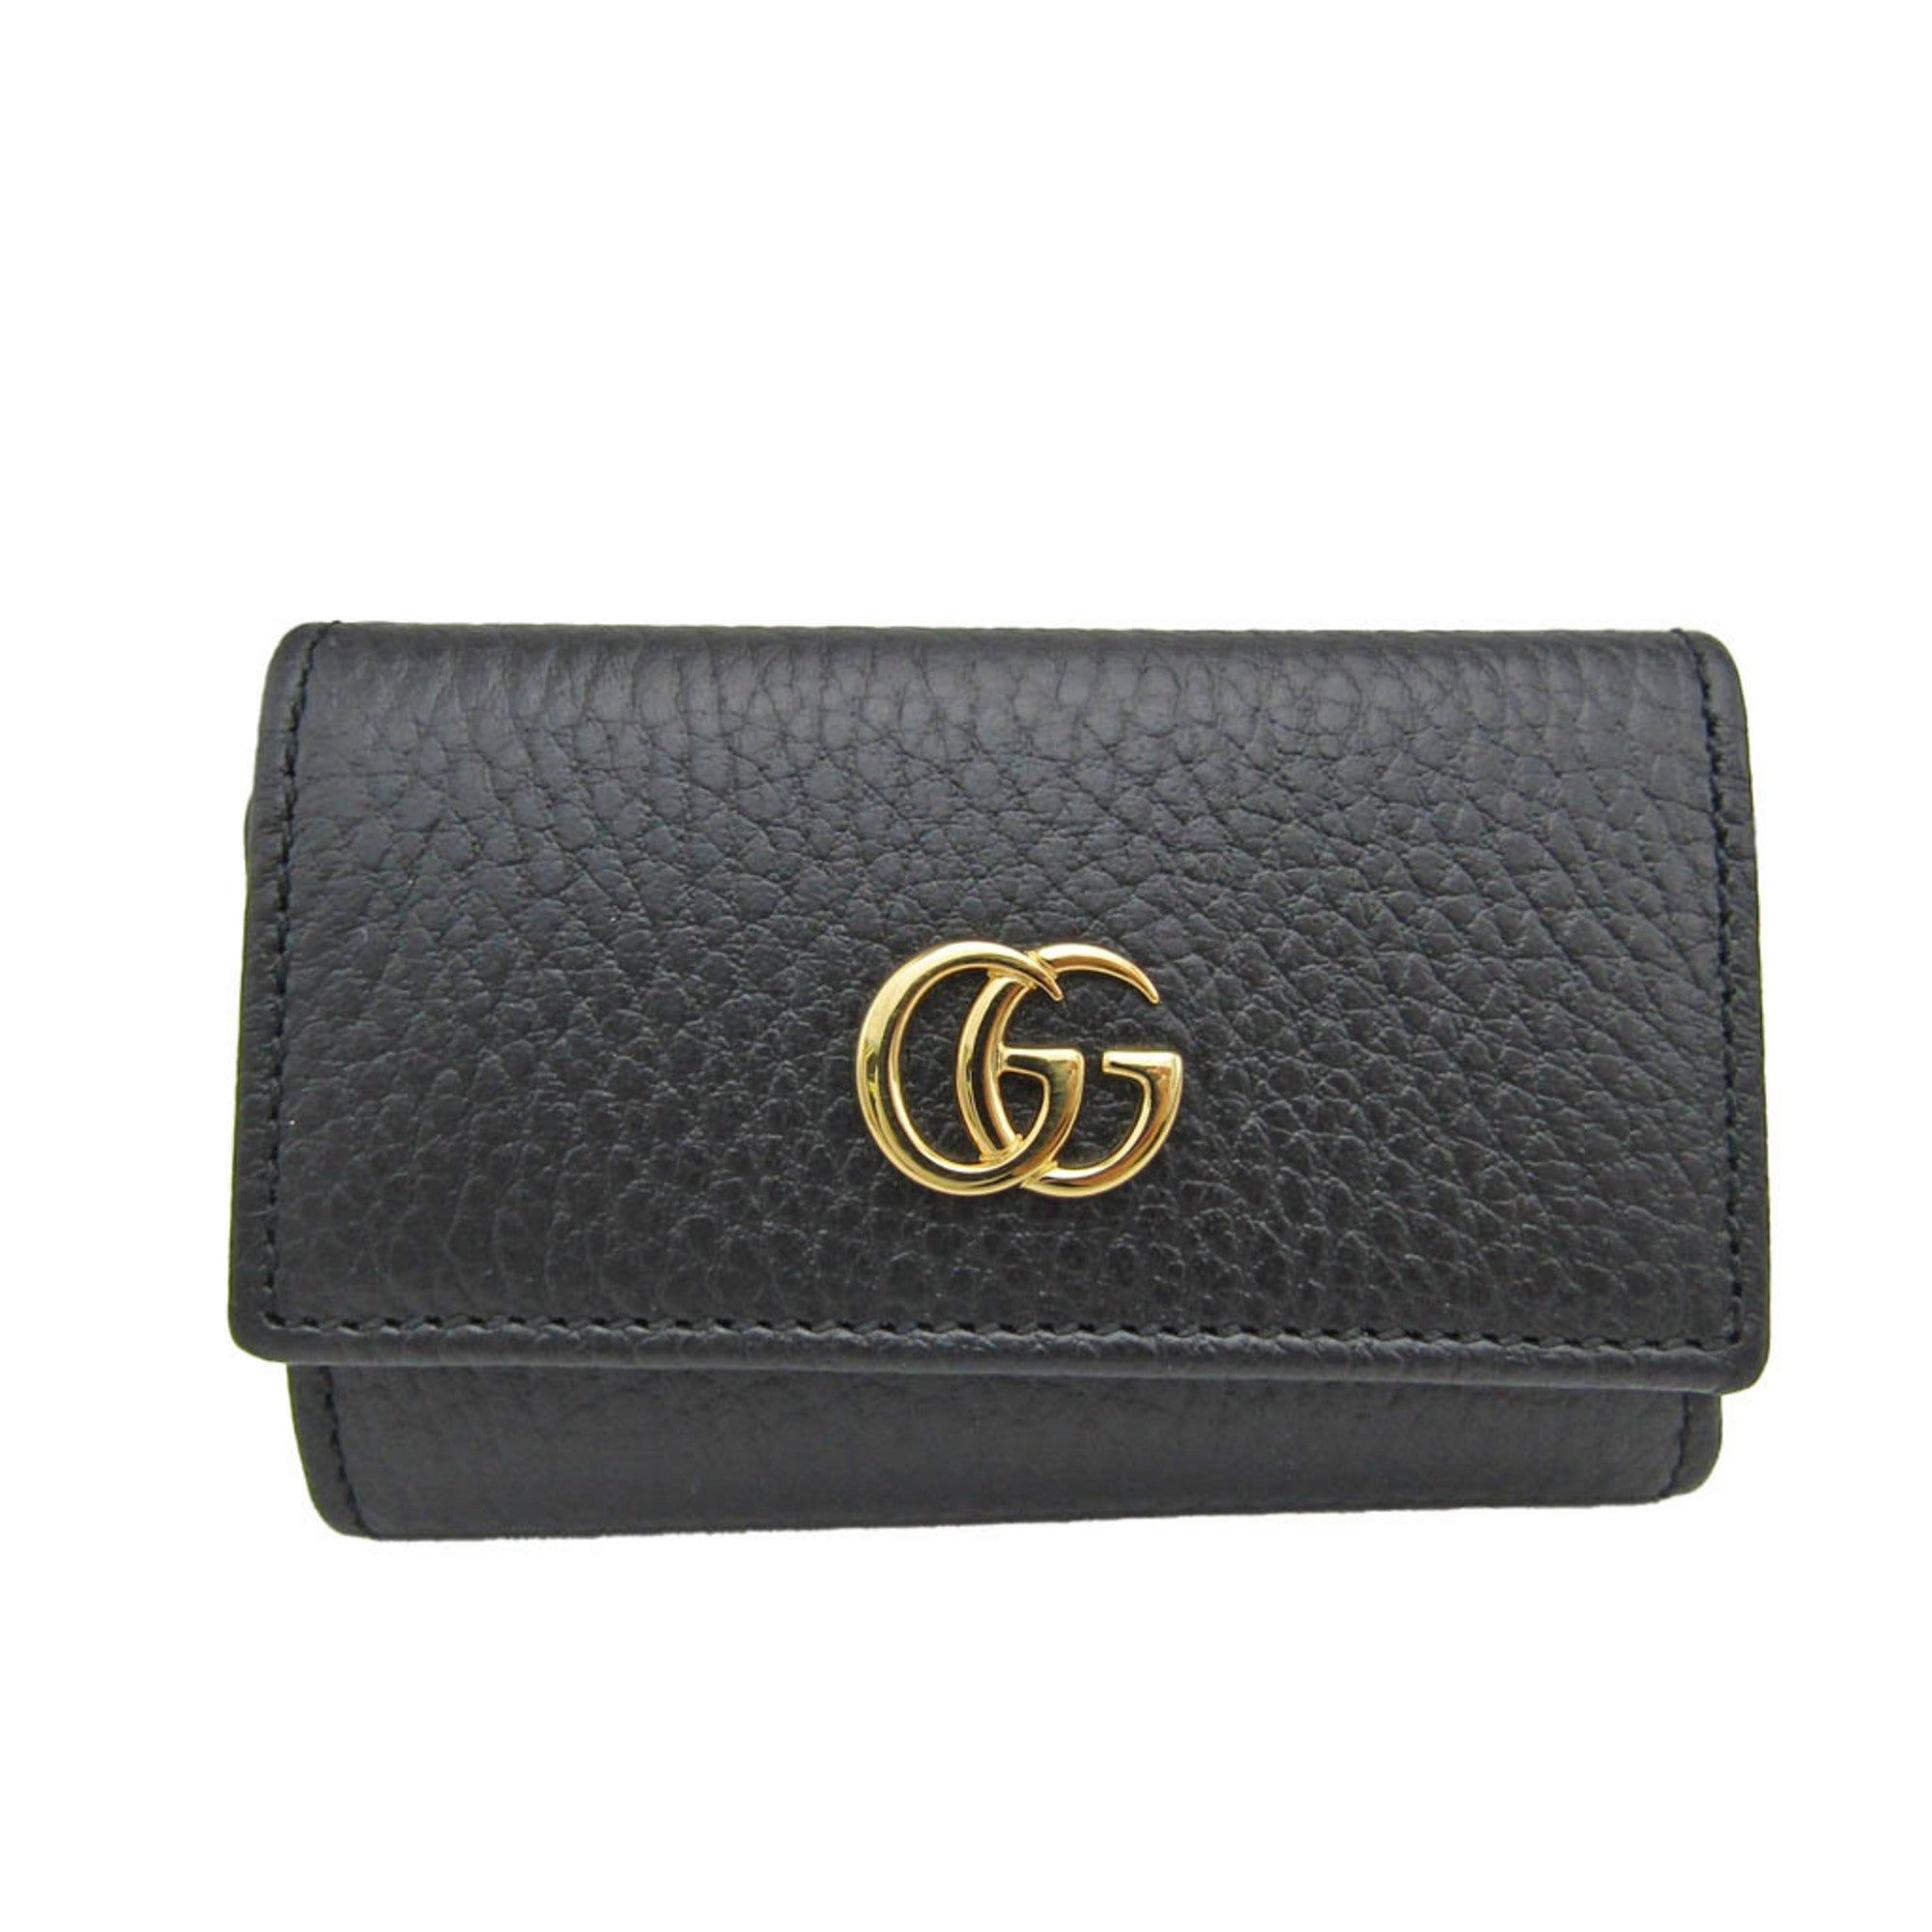 Gucci GUCCI GG Marmont 456118 Women,Men Leather Key Case Black Size ONE SIZE - 1 Preview